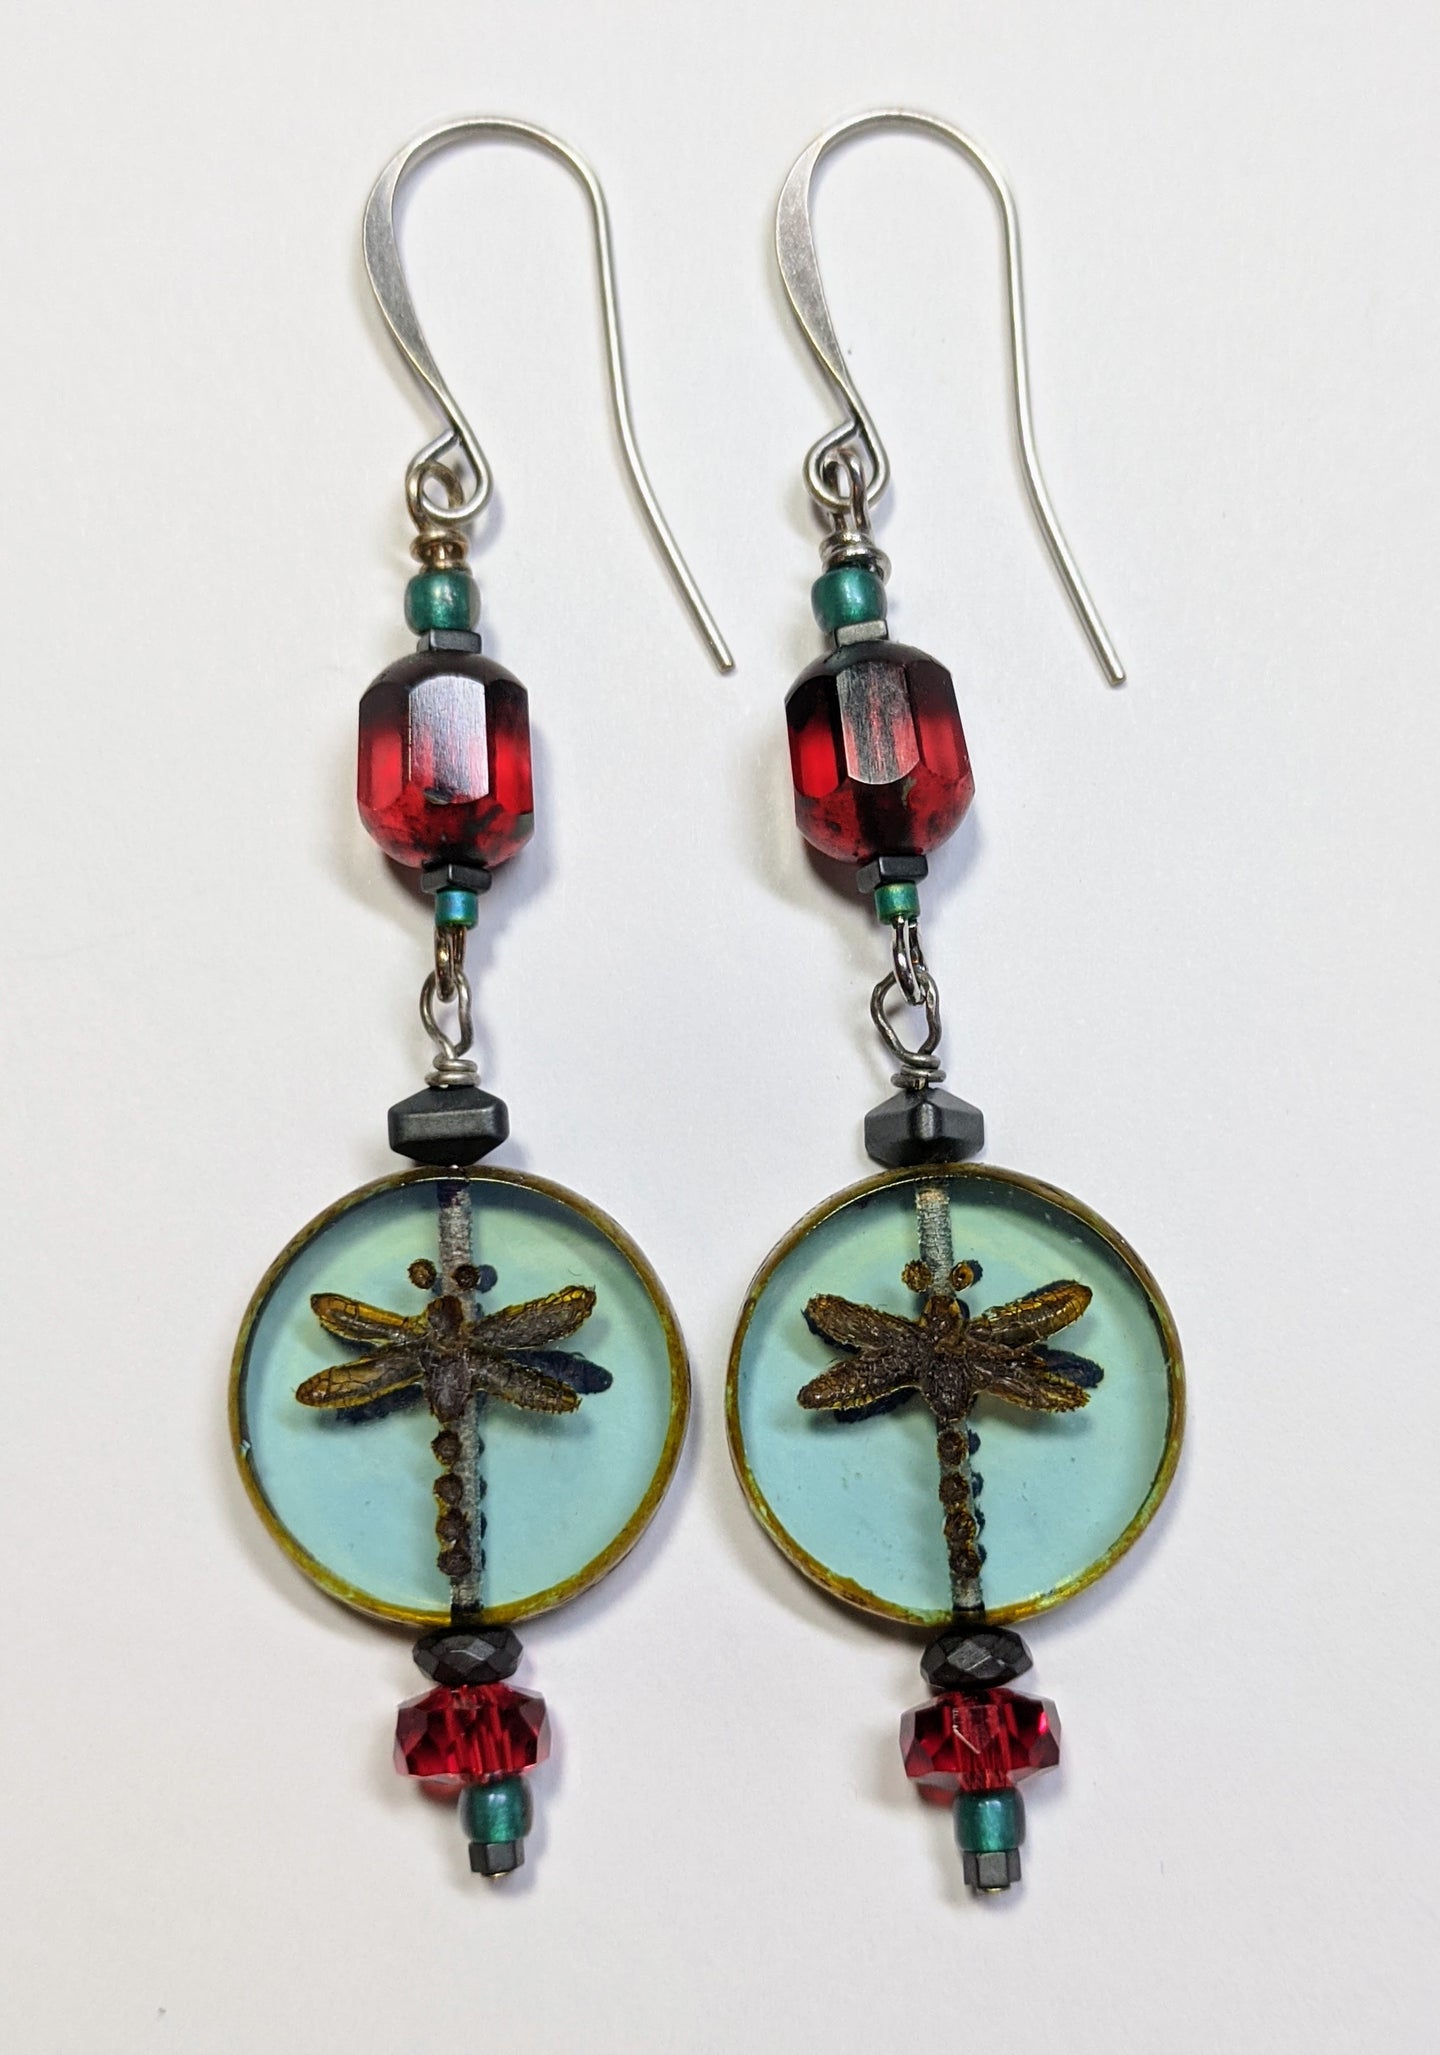 dragonfly earrings # 2 - sunroot studio